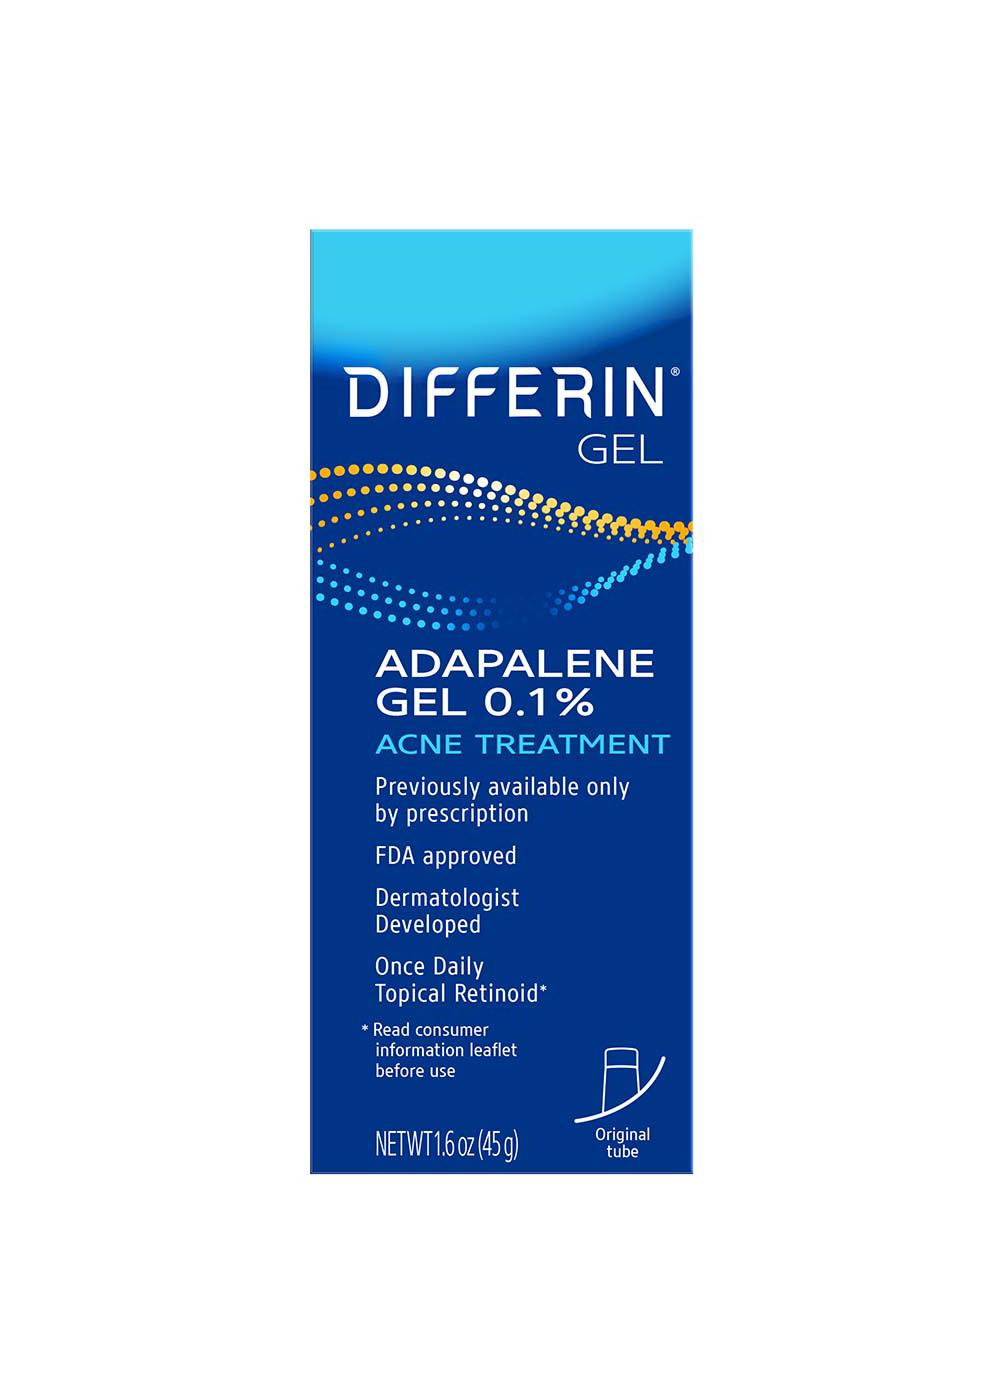 Differin Gel Acne Treatment 0.1% Adapalene; image 1 of 8